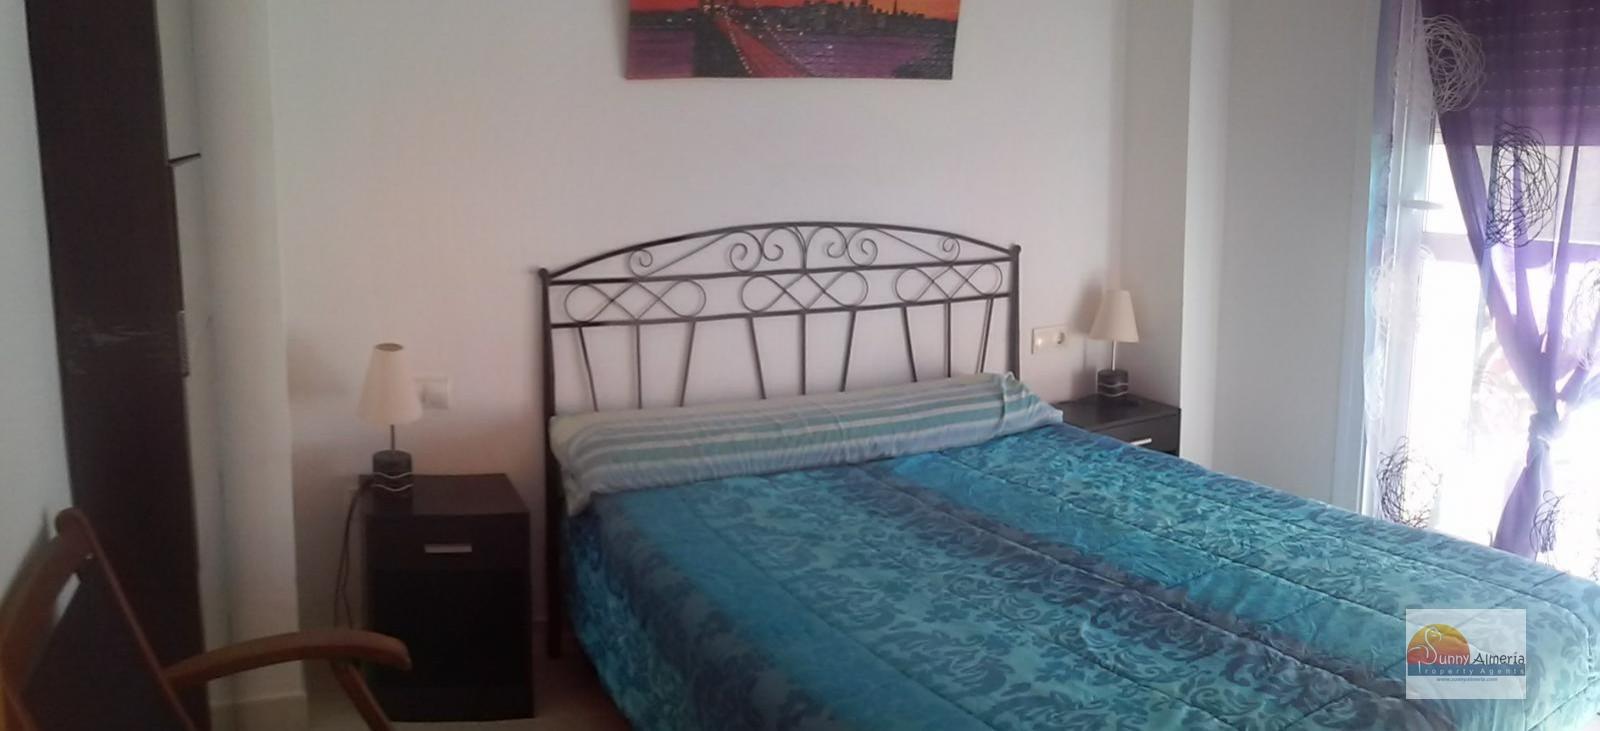 Appartamento de Lusso in affitto a Av. Cerrillos  86 (Roquetas de Mar), 650 €/settimana